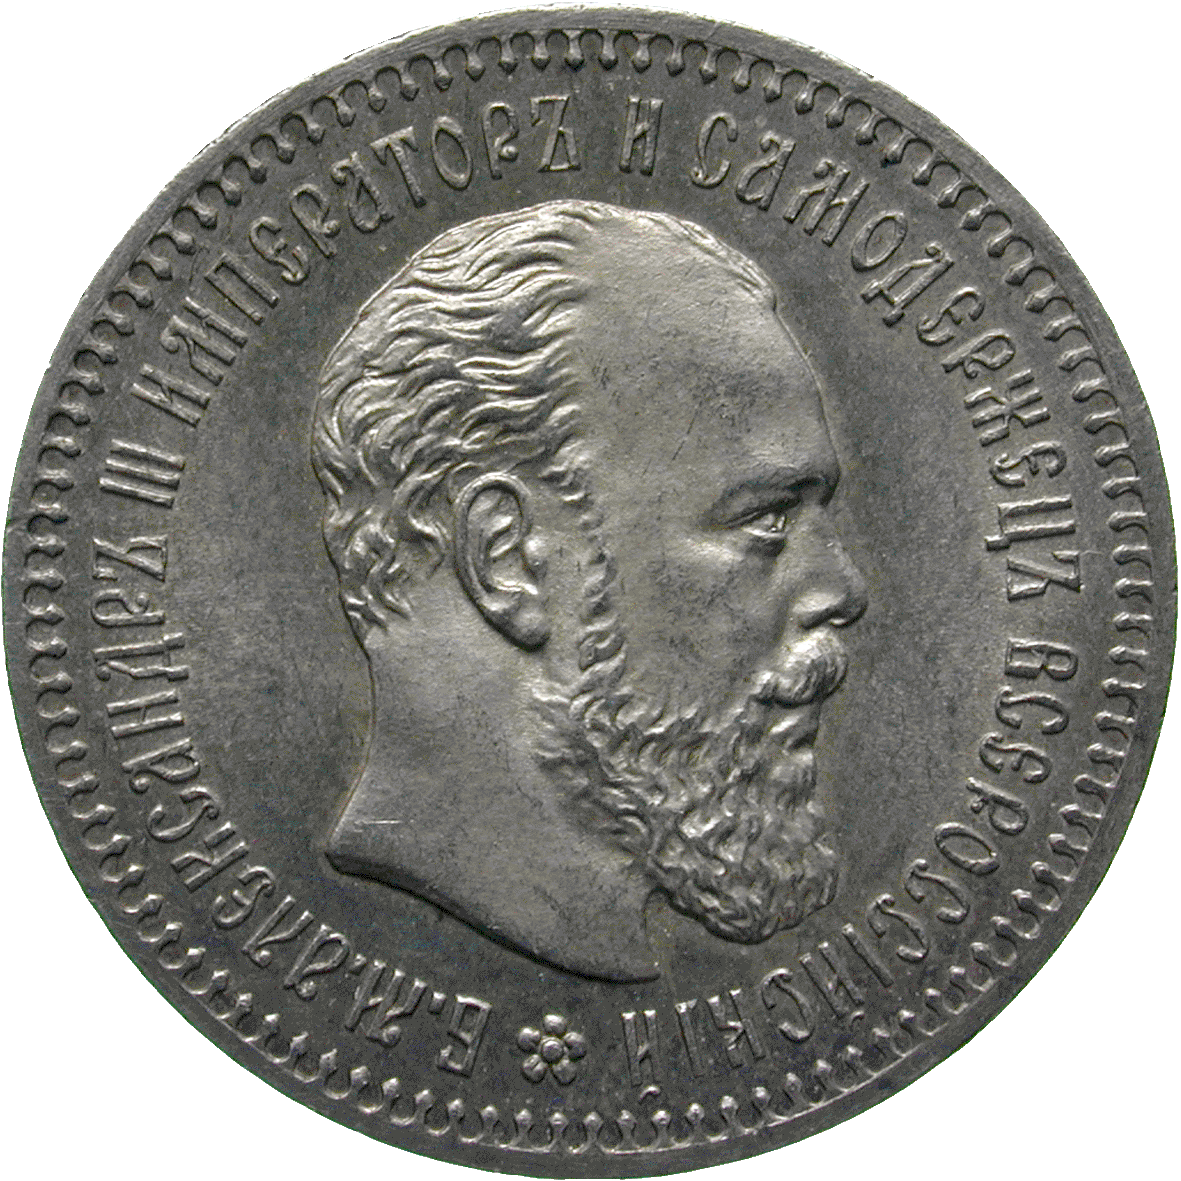 Zarenreich Russland, Alexander III., 25 Kopeken 1886 (obverse)